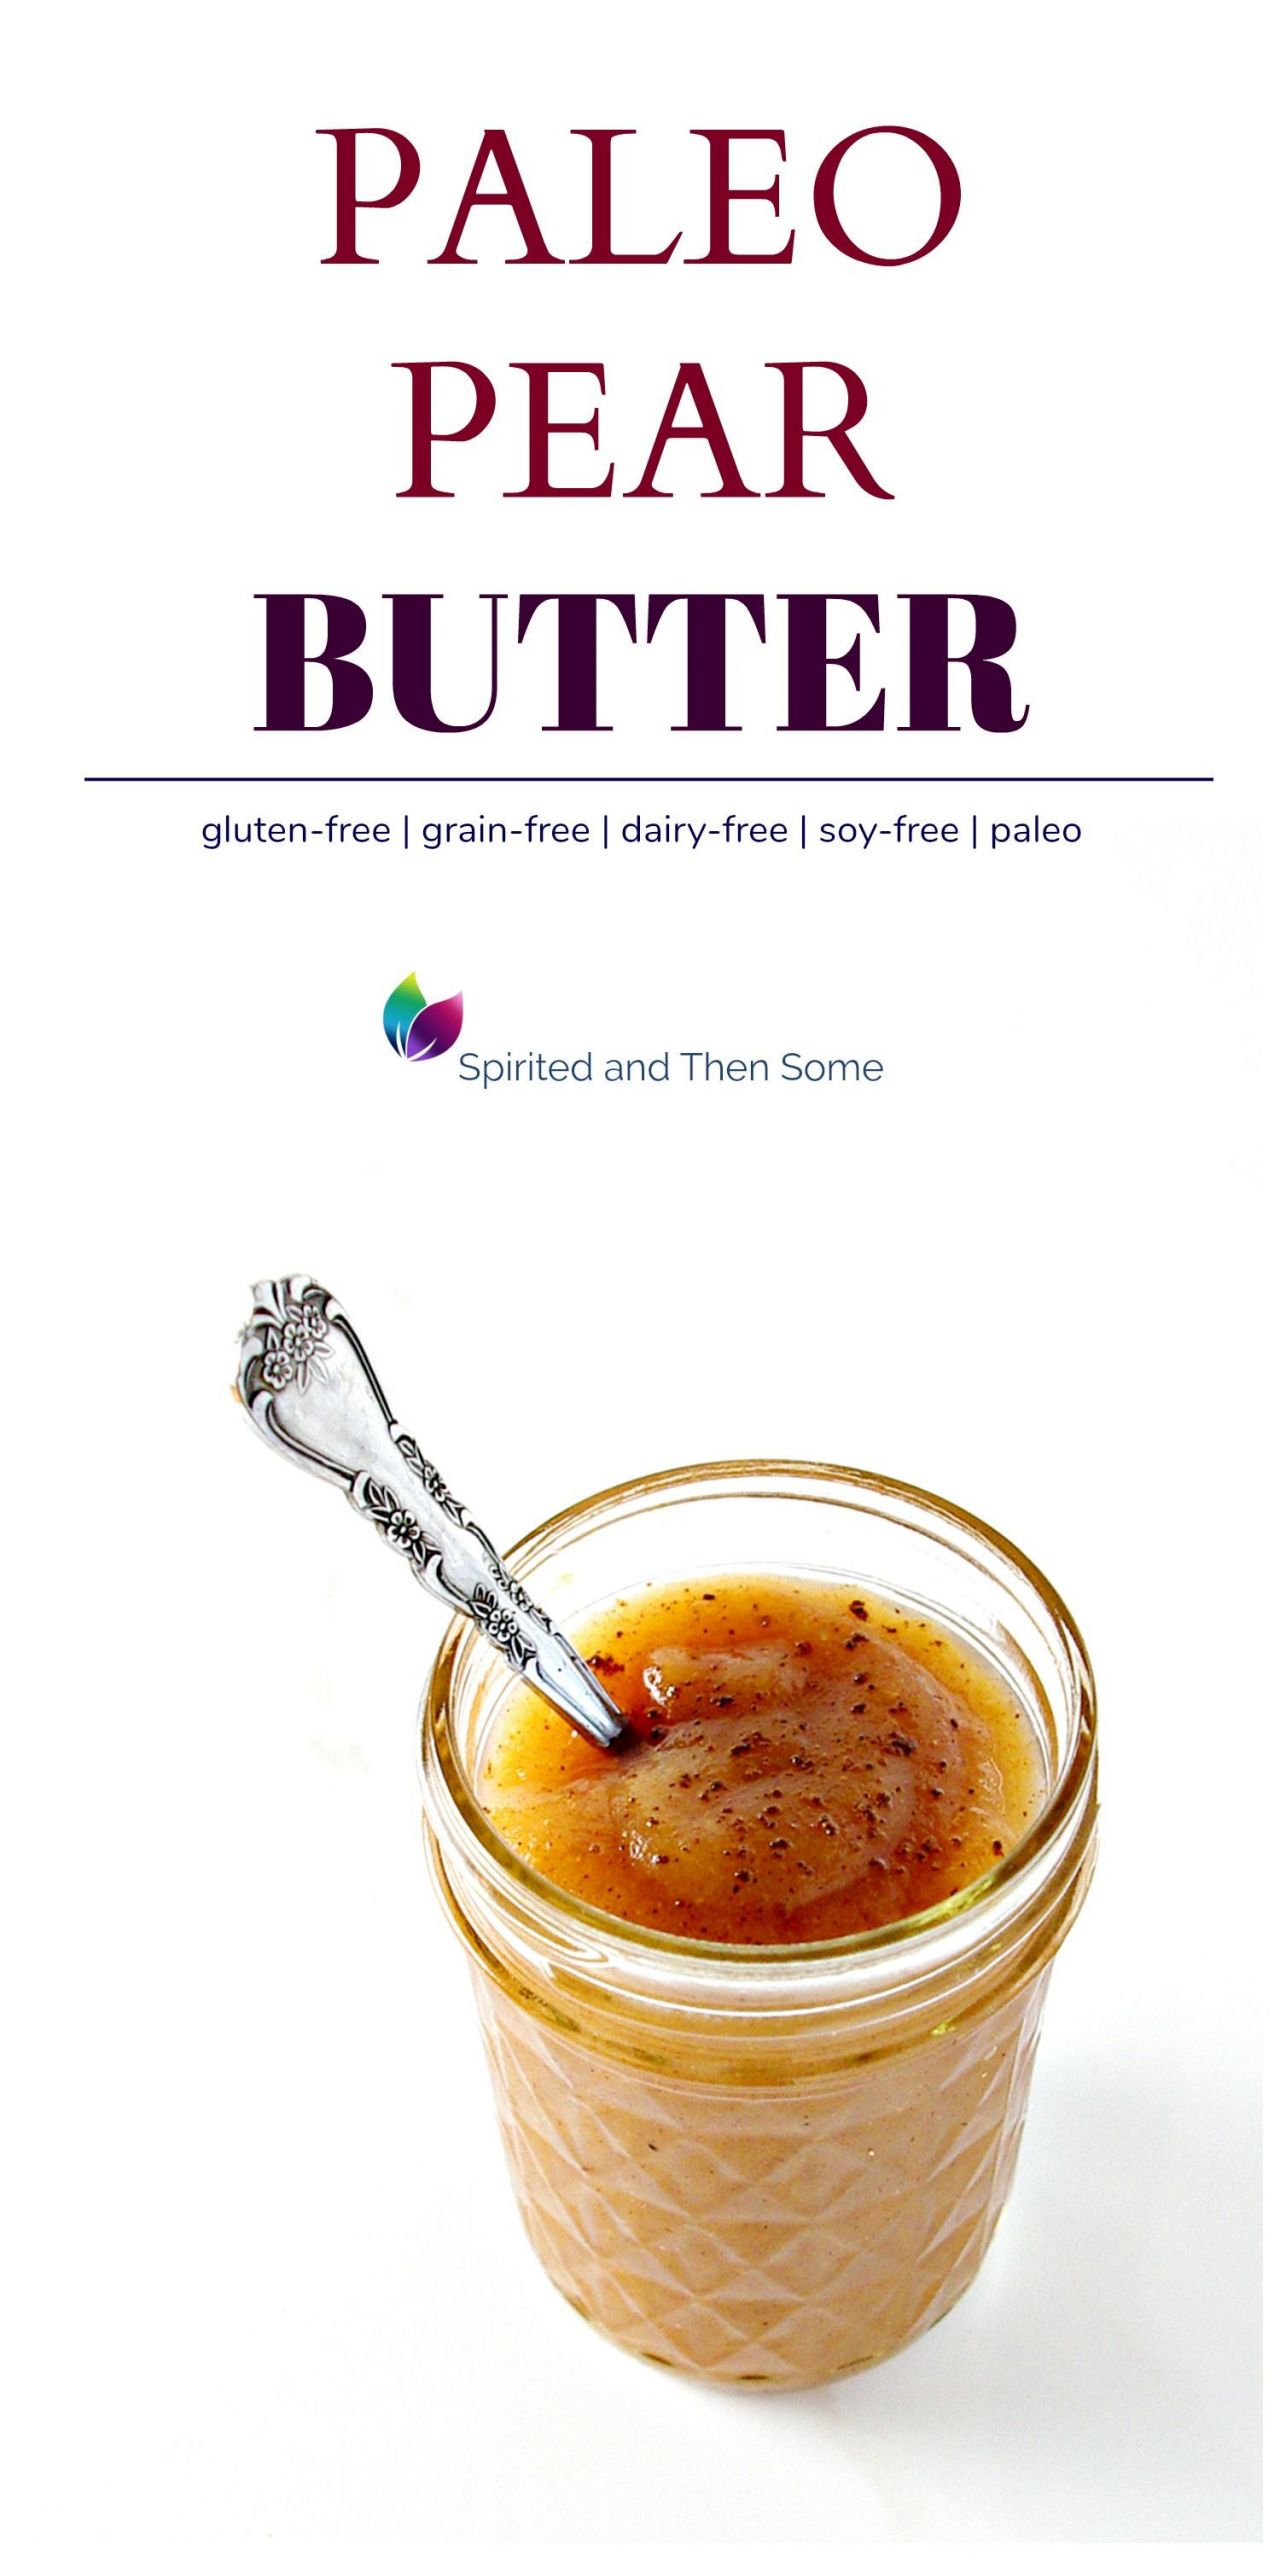 Paleo Diet Butter
 Paleo Pear Butter Recipe